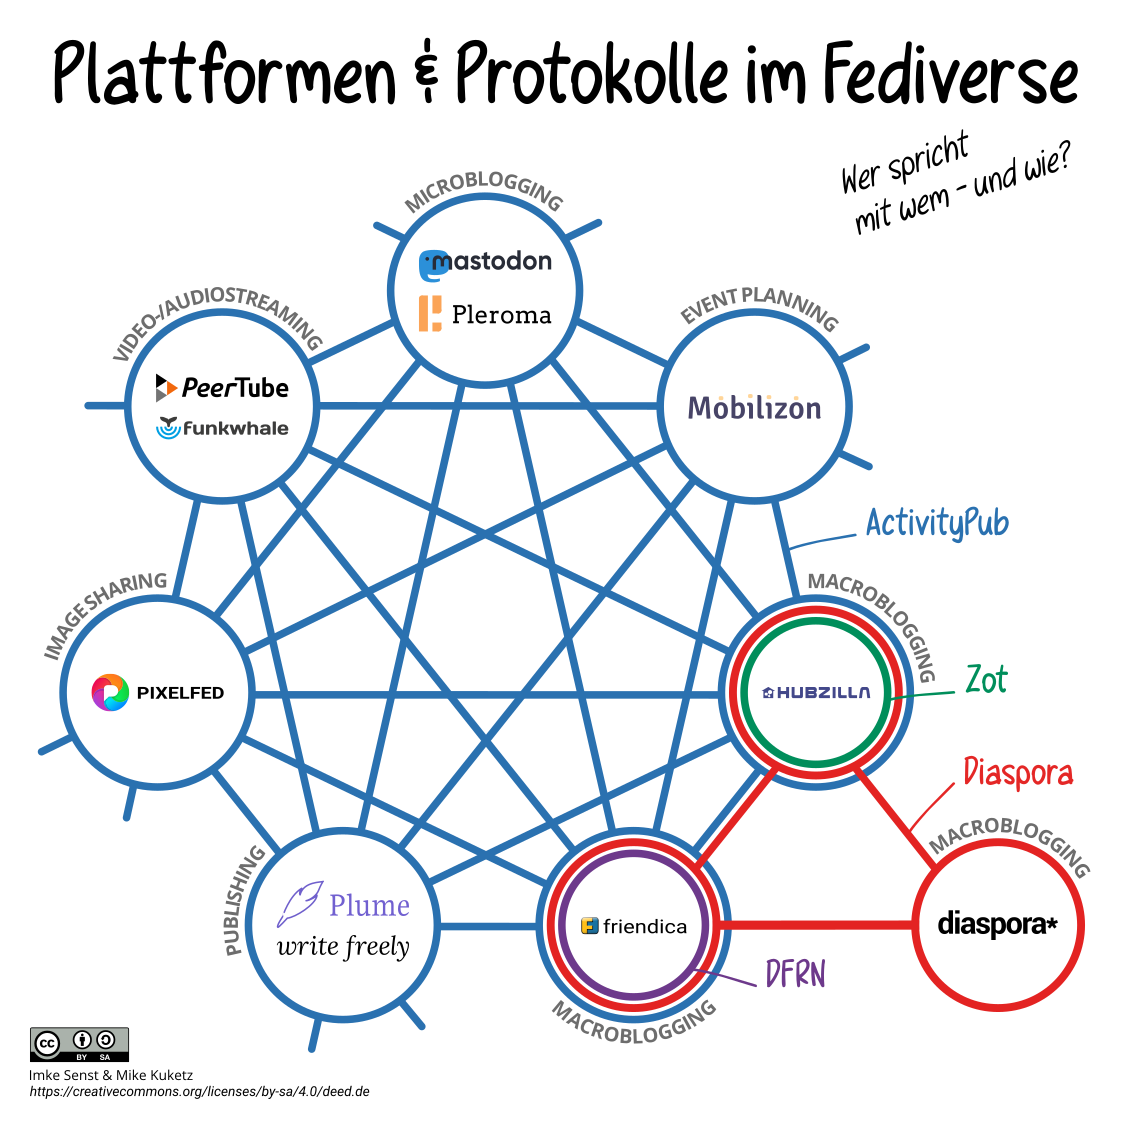 Plattforme/Protokolle im Fediverse